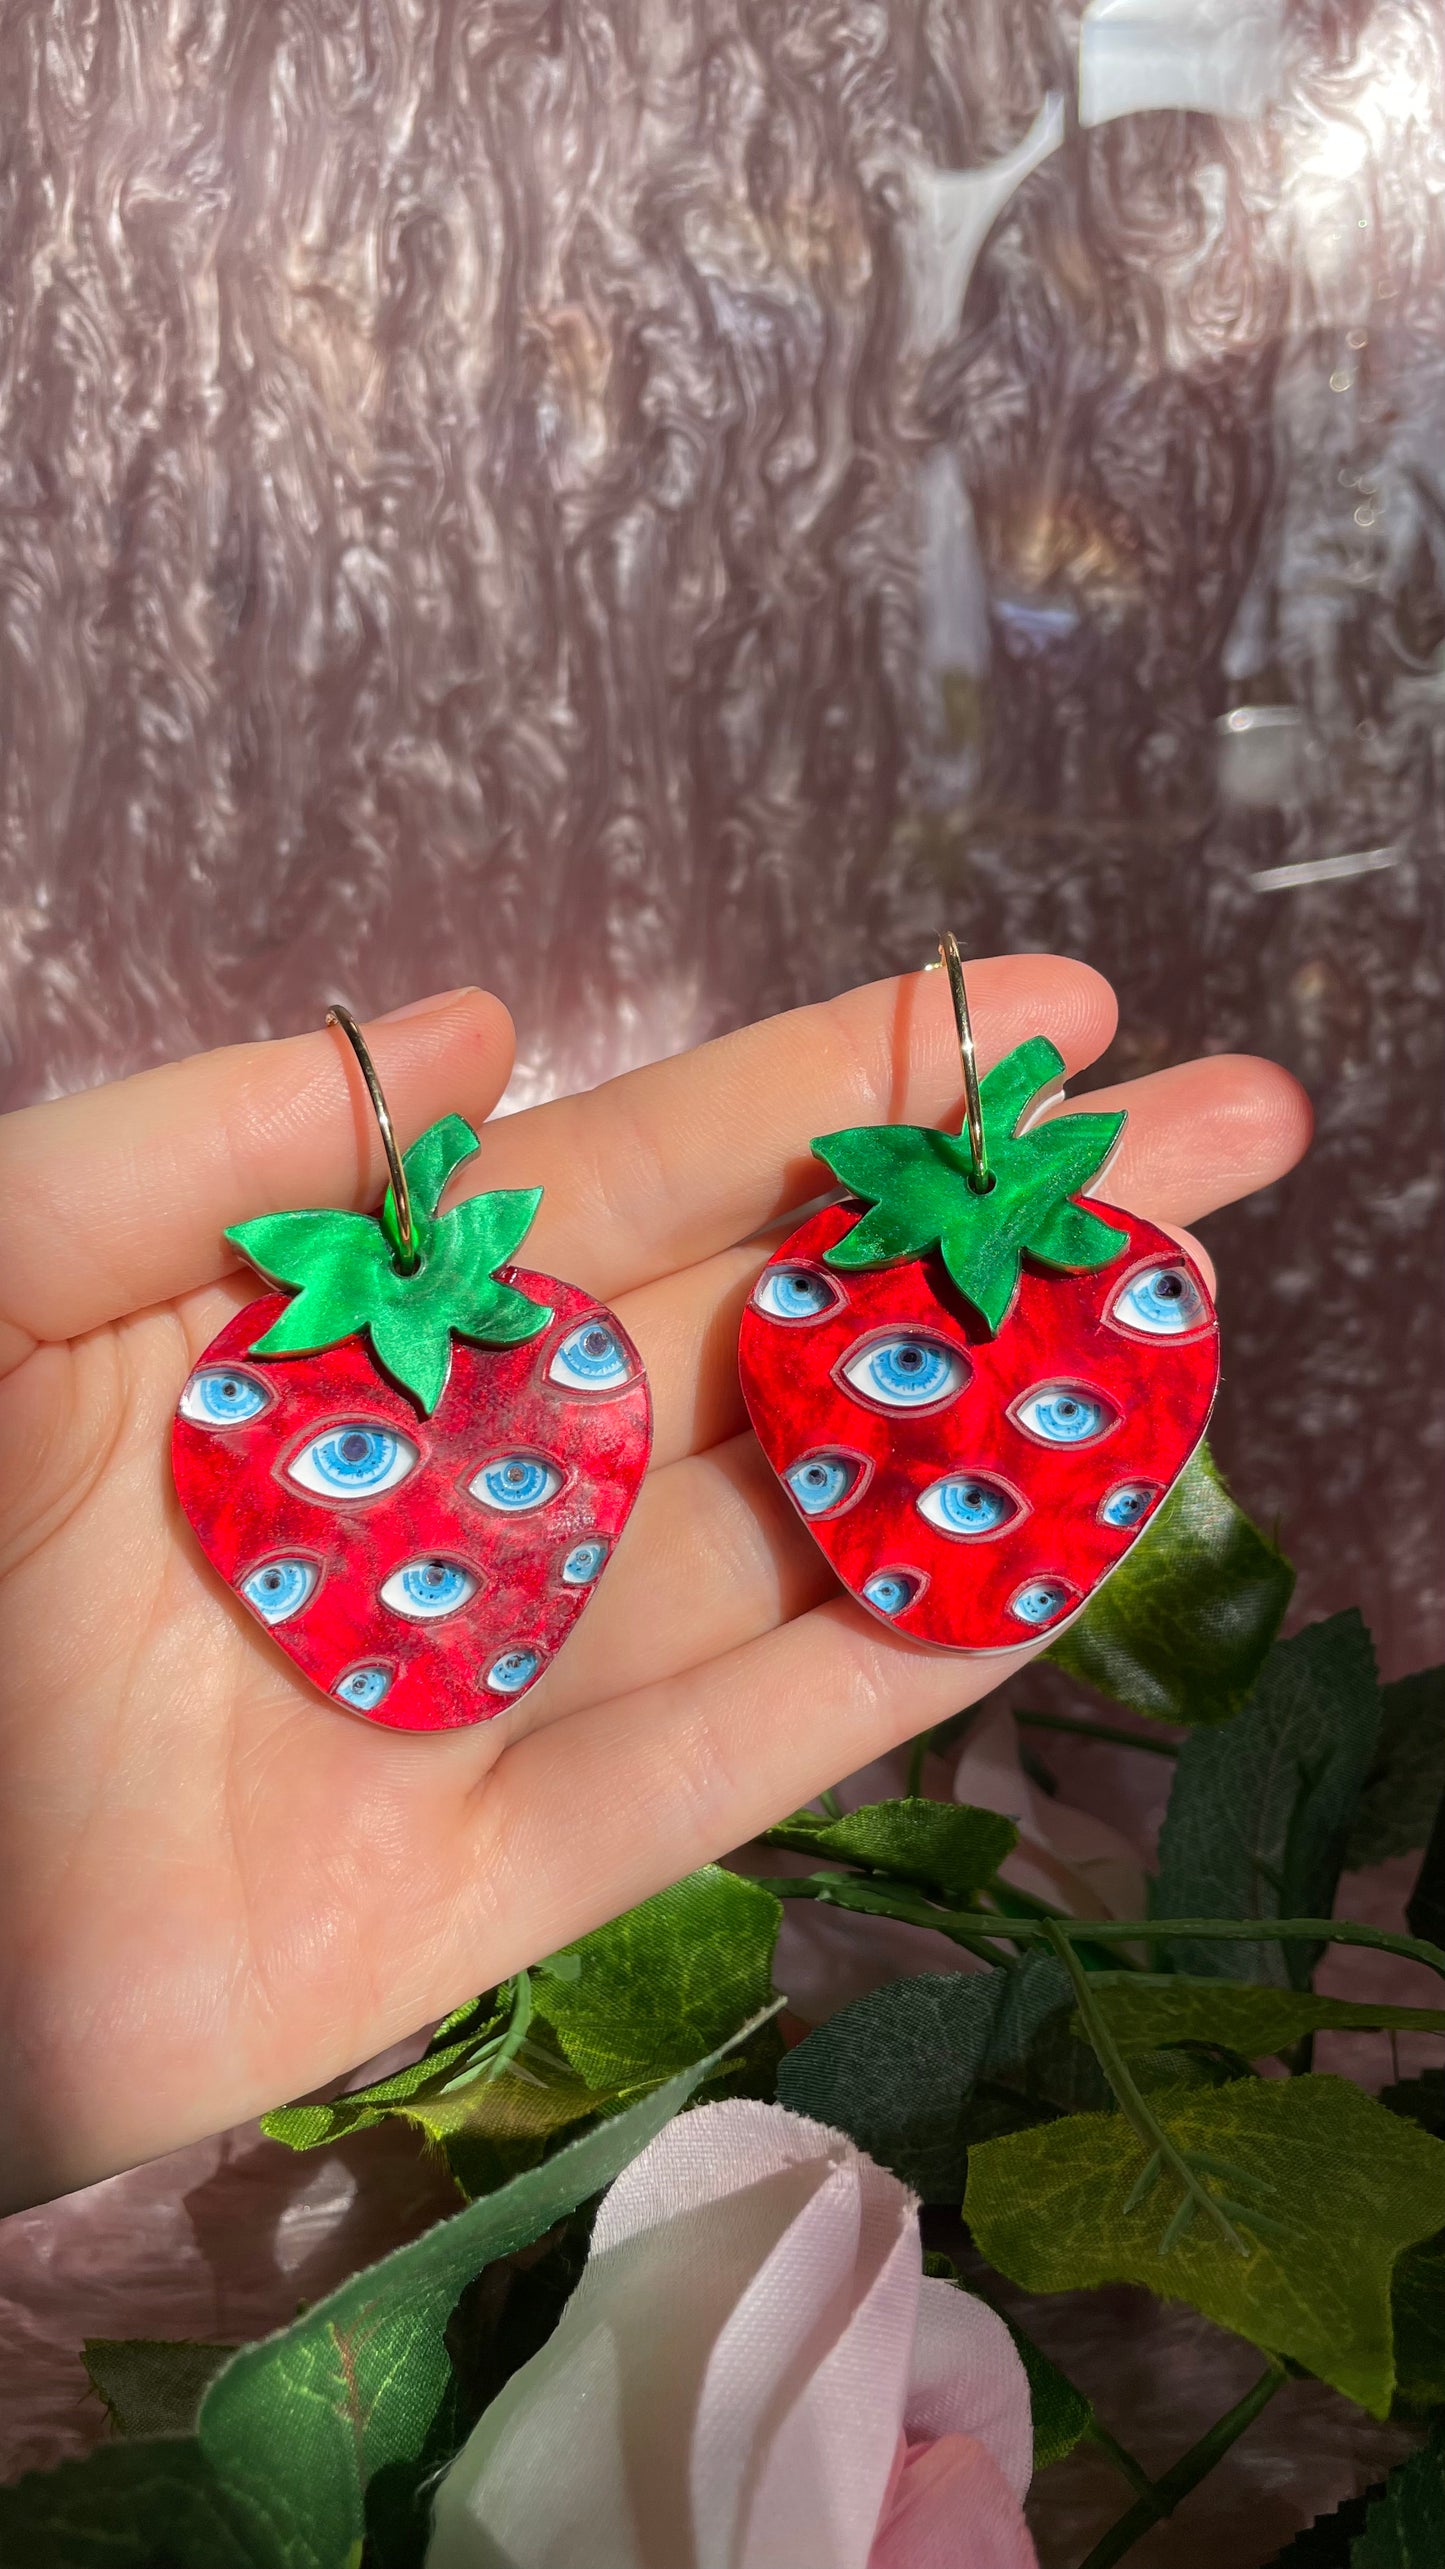 👁️ single strawberry 👁️